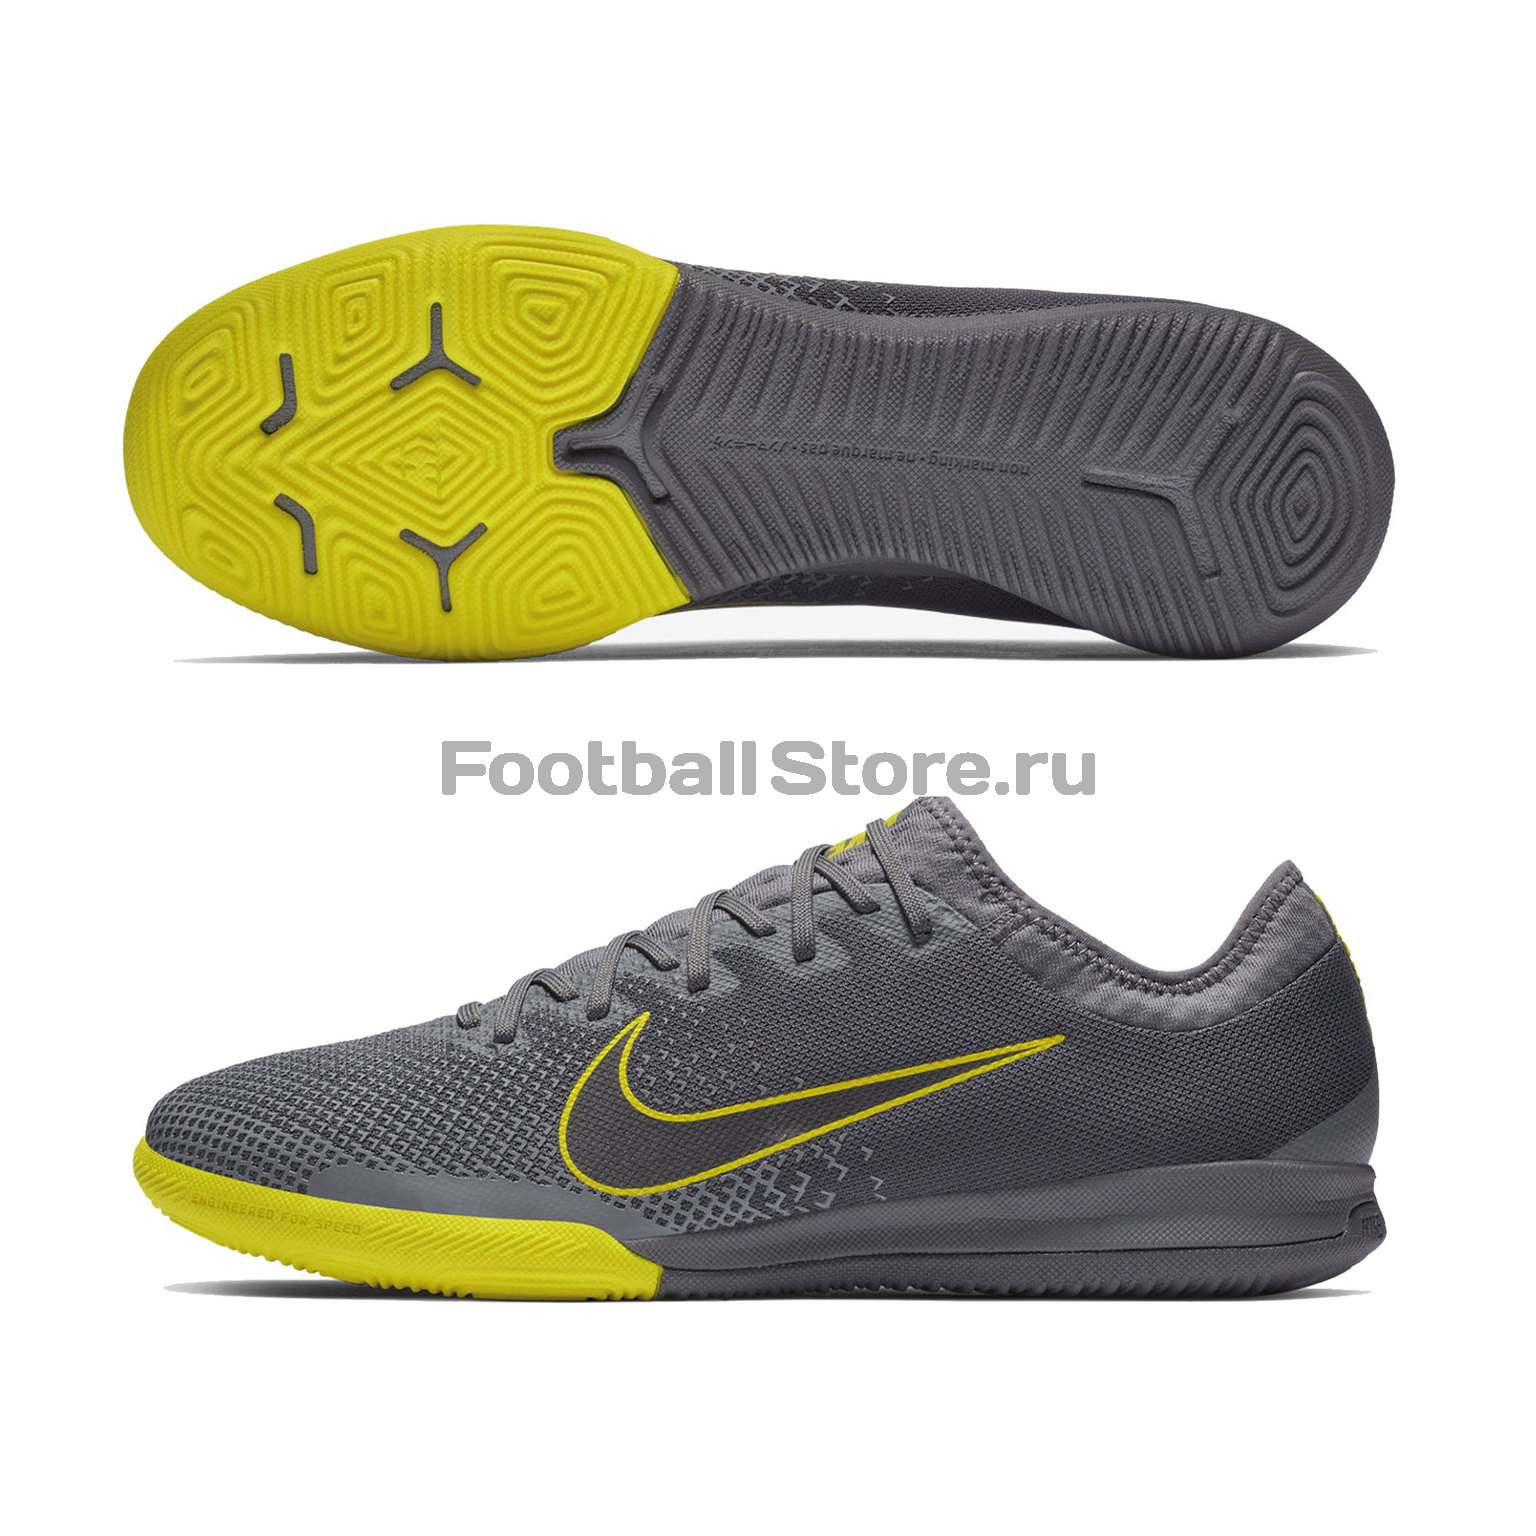 Футзалки Nike Vapor 12 Pro IC AH7387-070